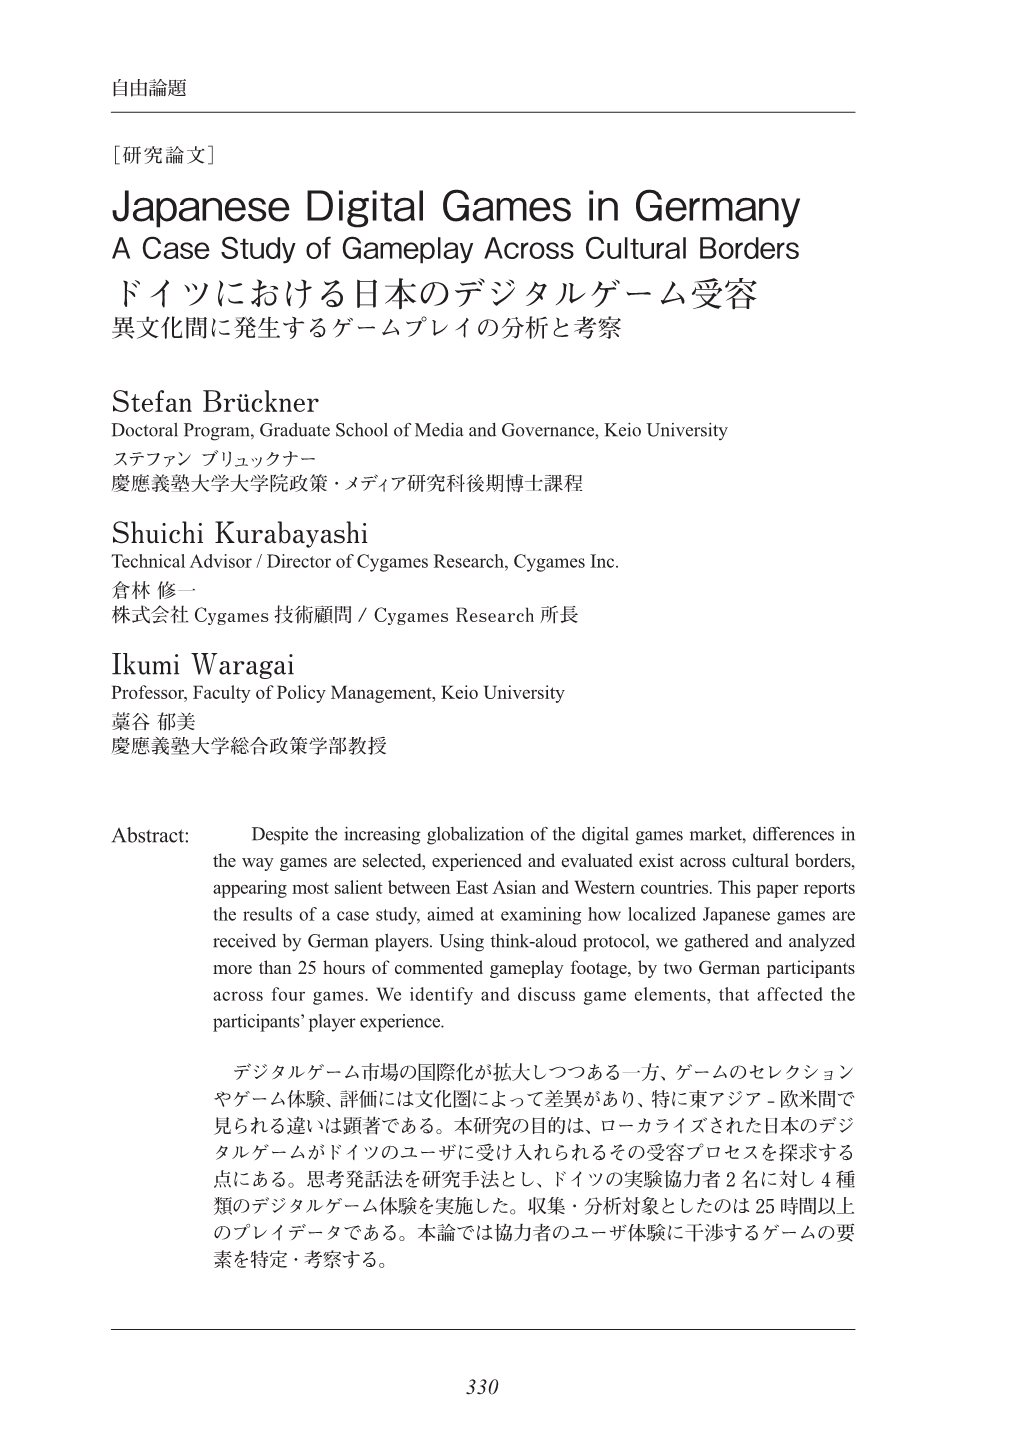 Japanese Digital Games in Germany a Case Study of Gameplay Across Cultural Borders ドイツにおける日本のデジタルゲーム受容 異文化間に発生するゲームプレイの分析と考察